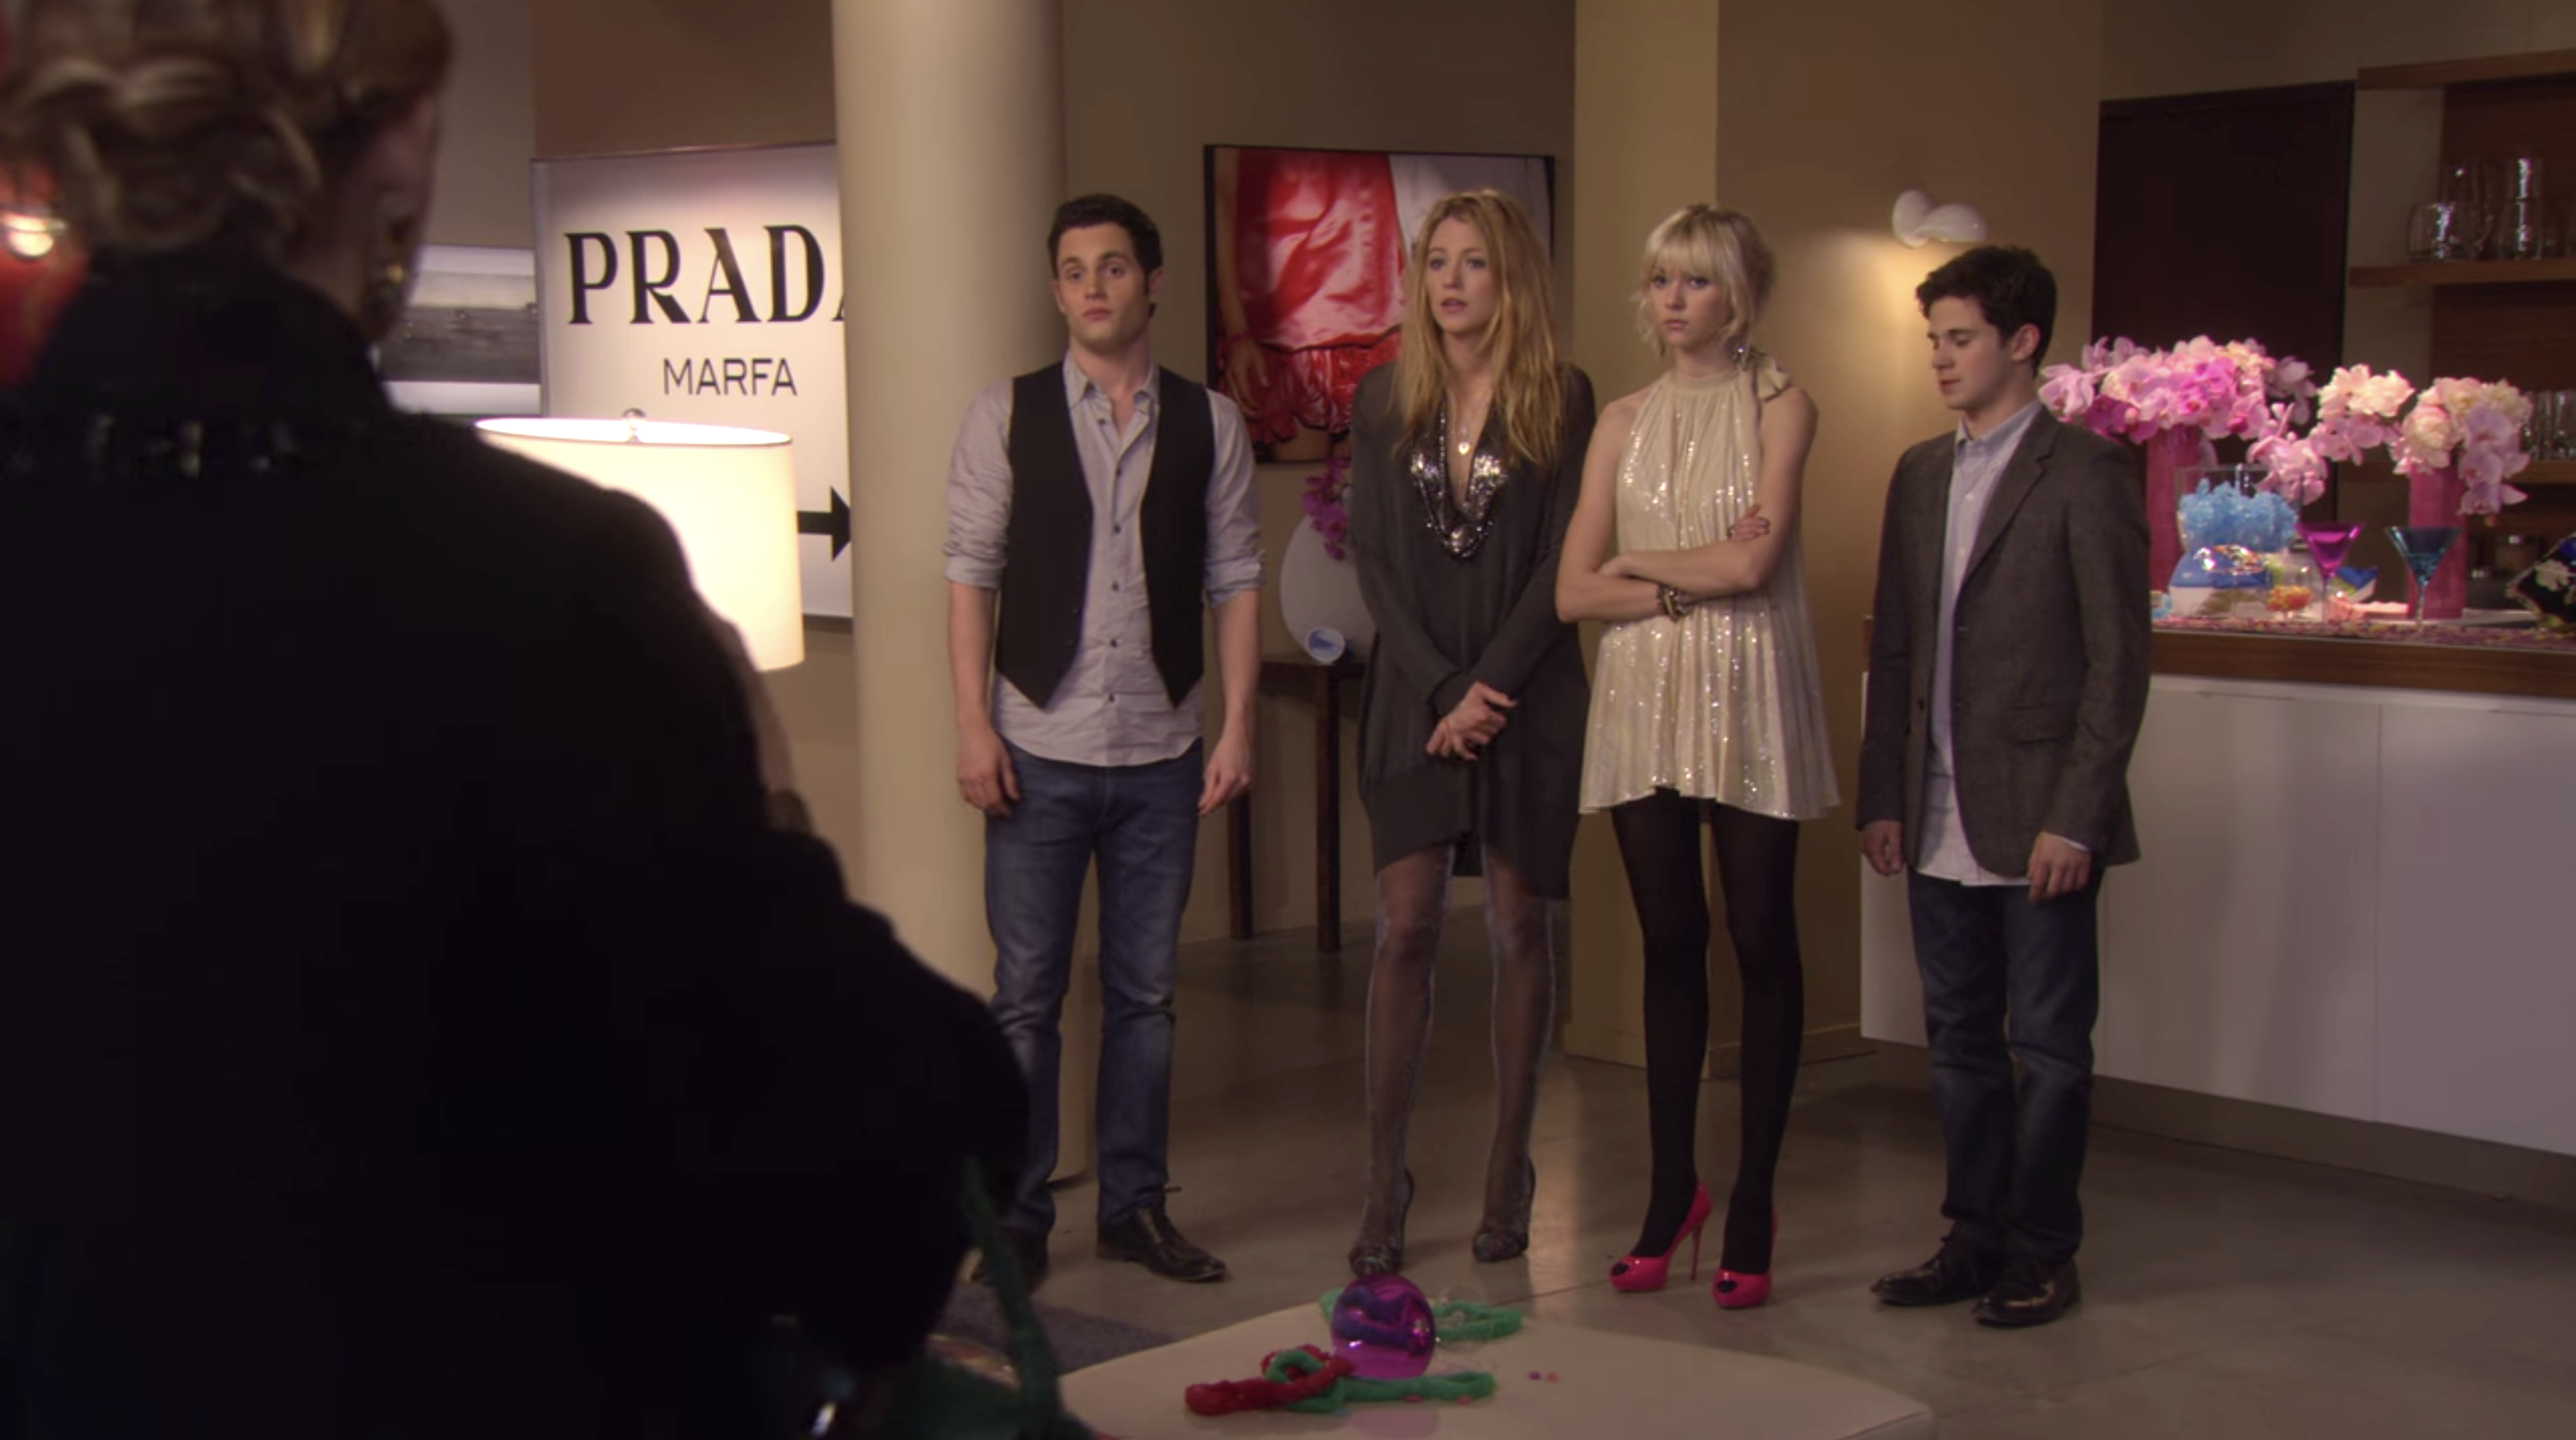 In Defense of the Prada Marfa Sign in 'Gossip Girl' - GARAGE